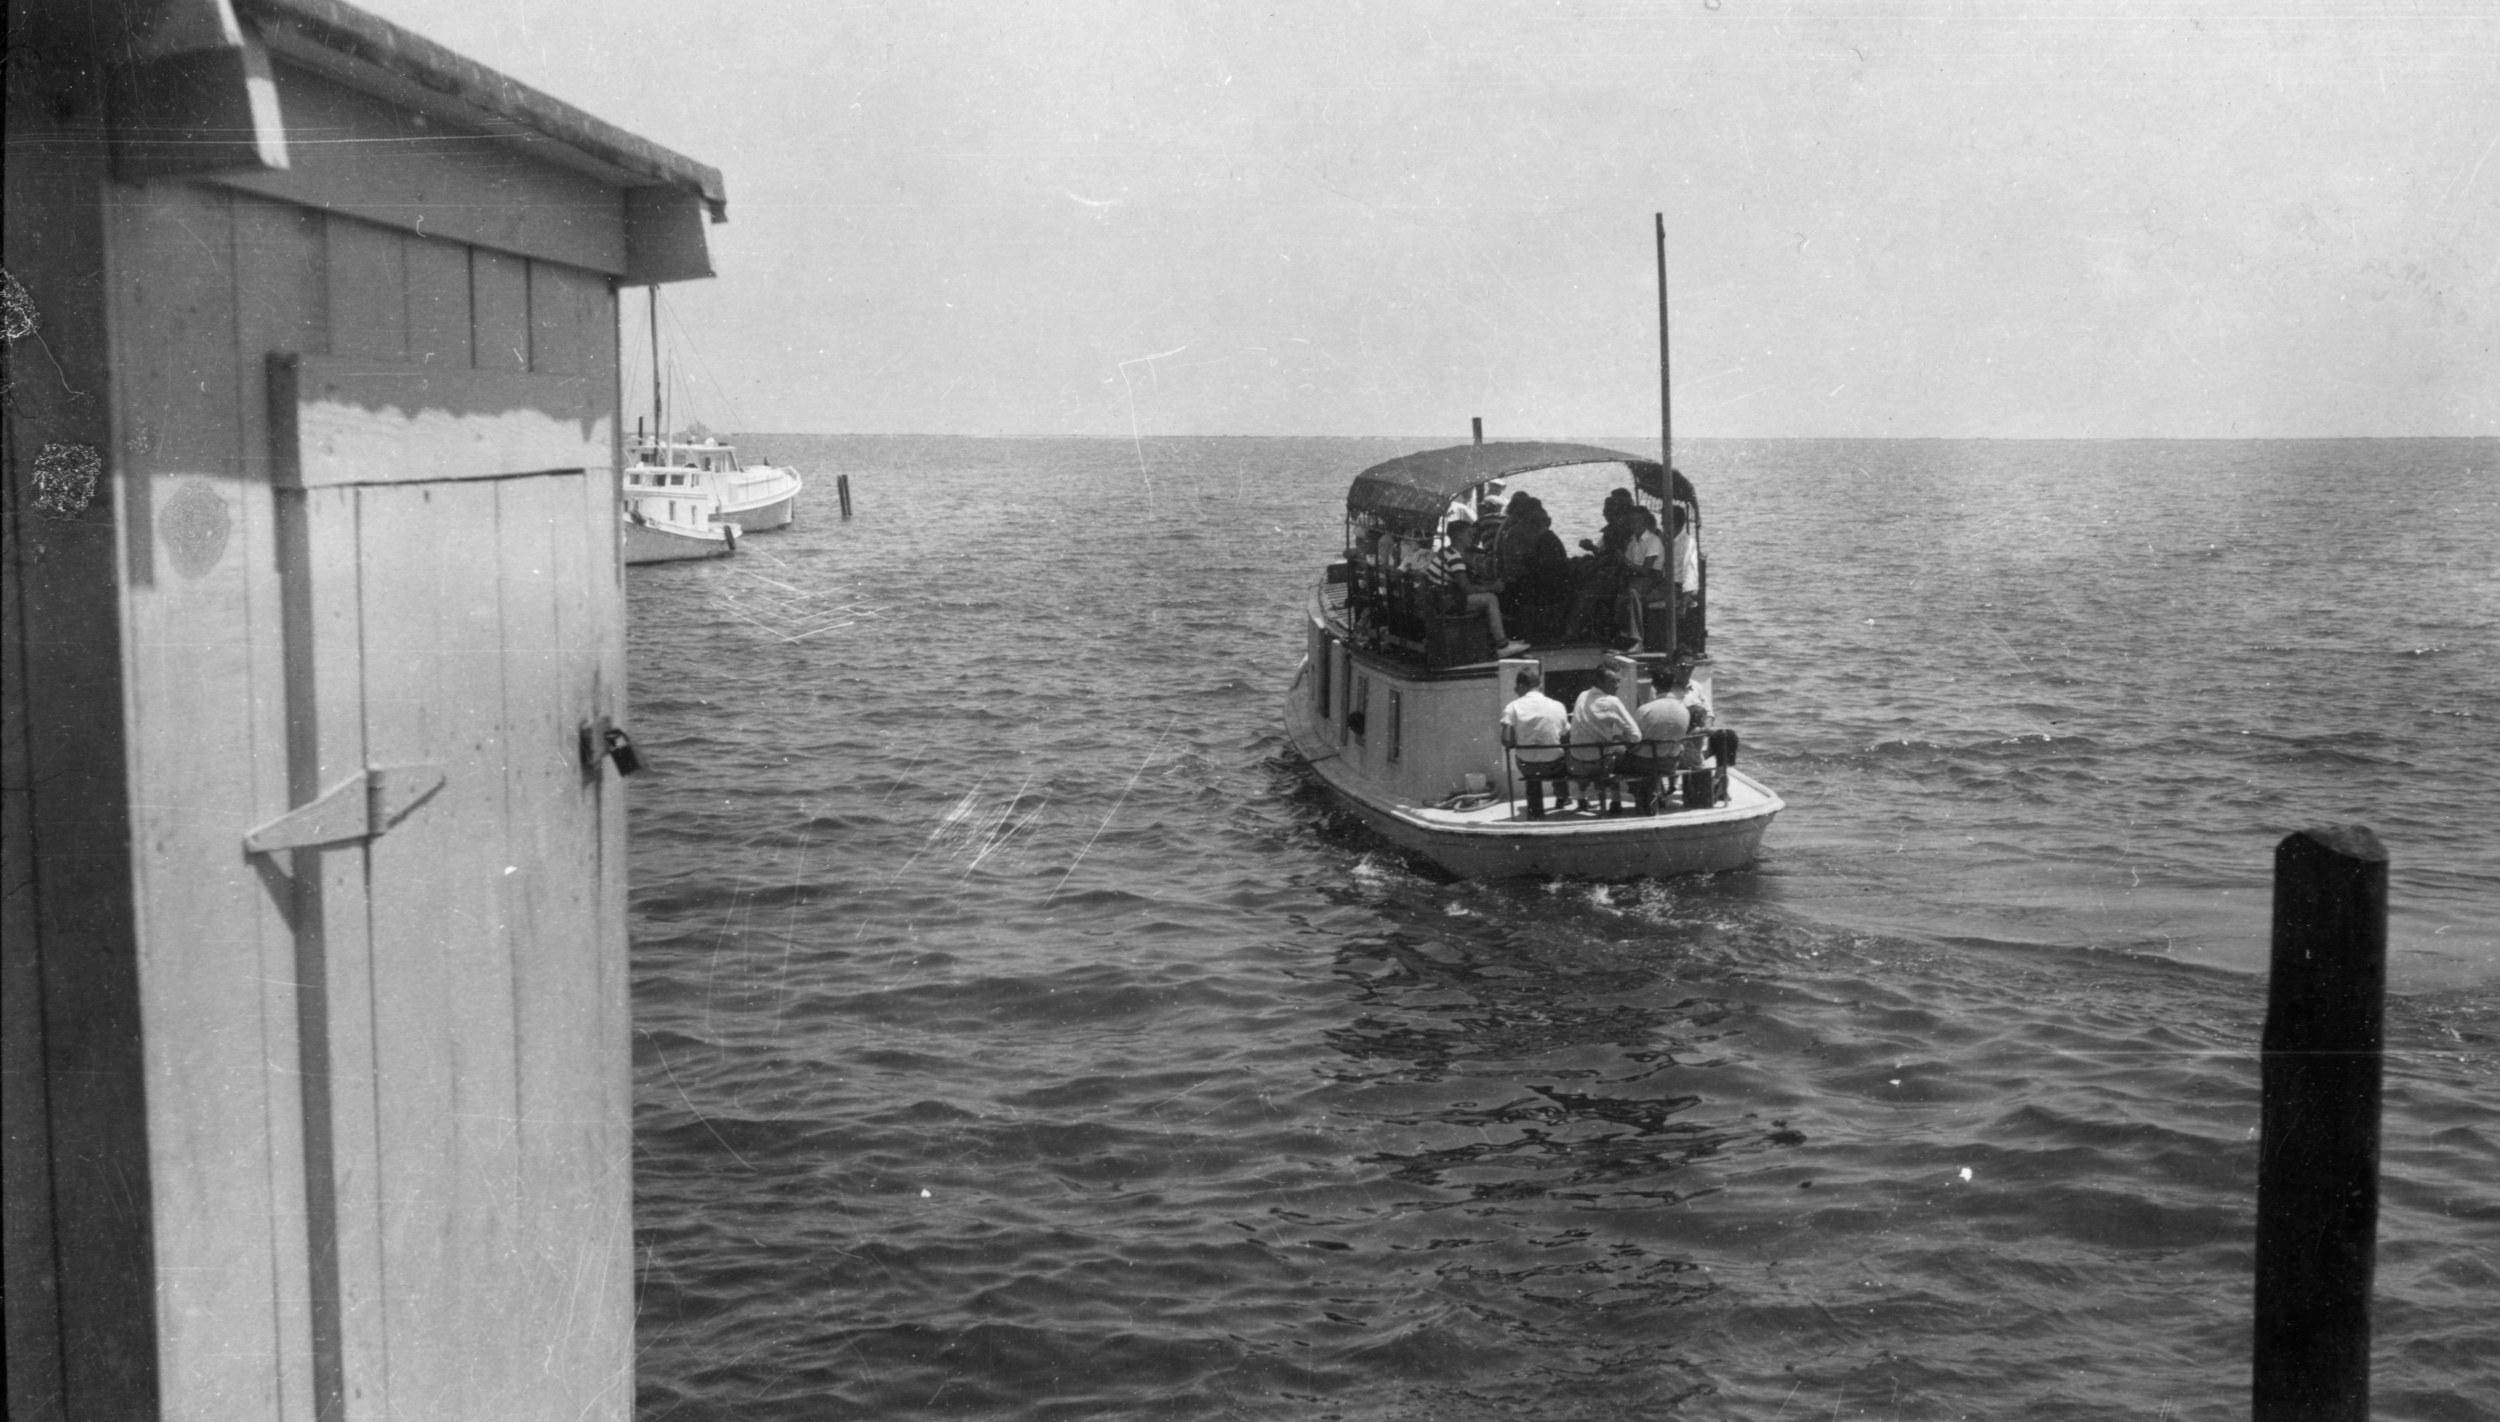 Mailboat Aleta Leaving Atlantic, 1920s